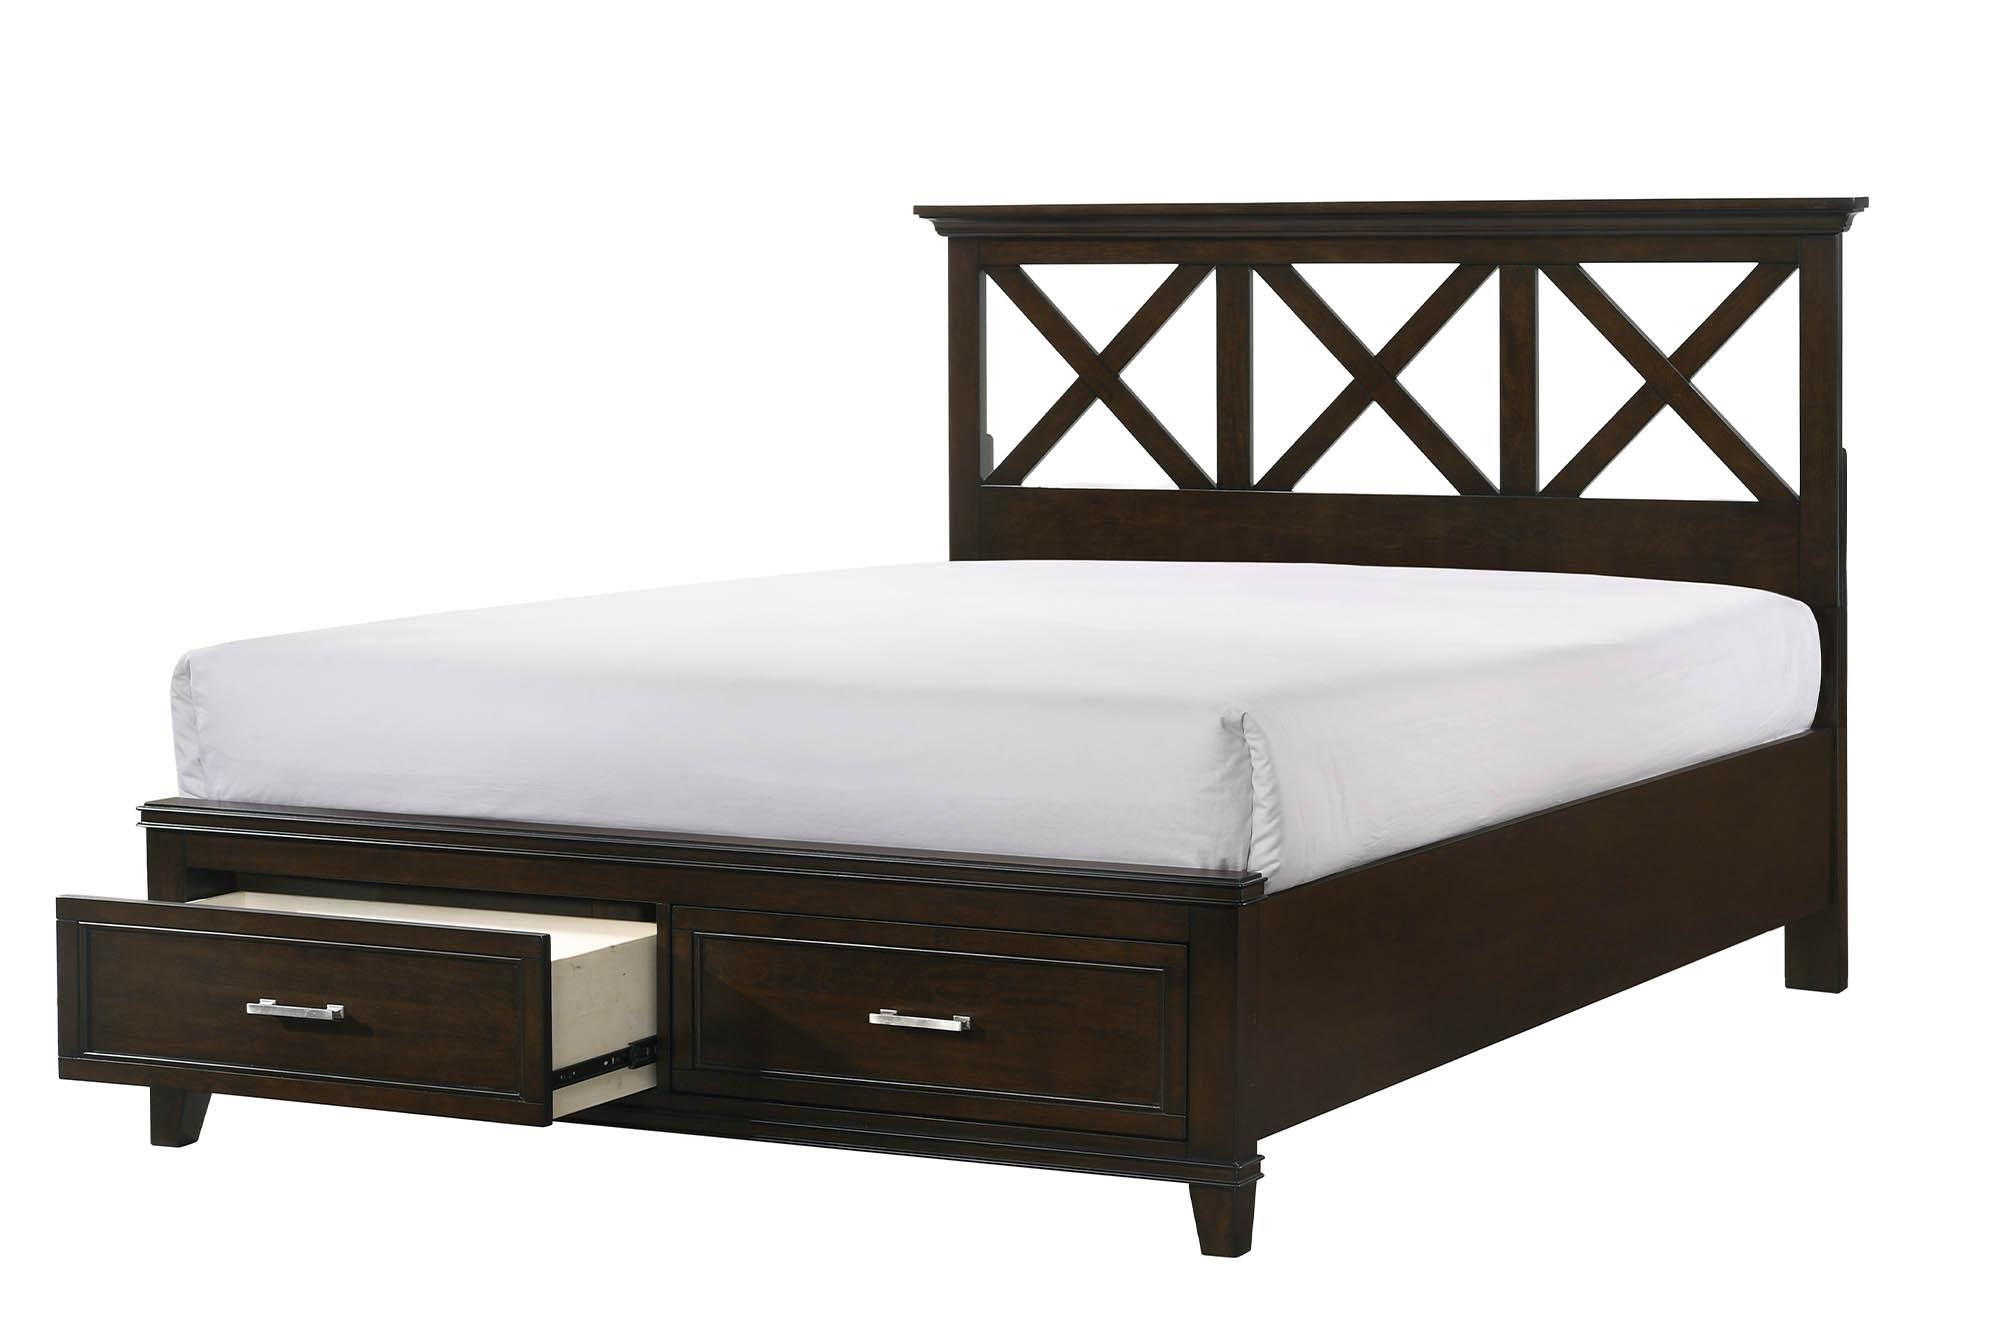 Modern, Transitional Storage Bed NOVA II 1282-110 1282-110 in Cherry 